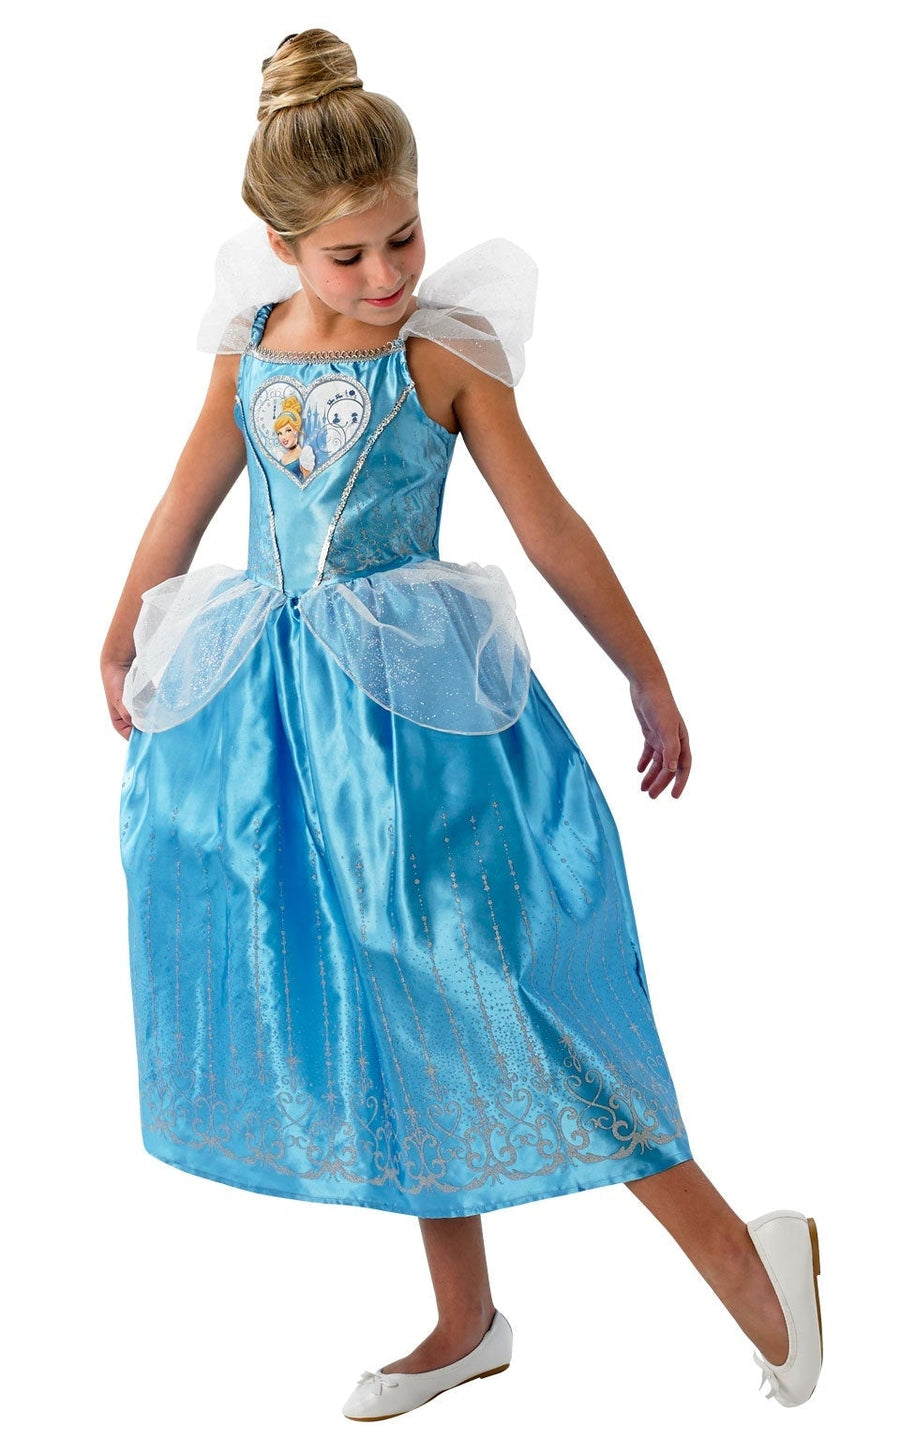 Loveheart Cinderella Costume_1 rub-6105909-10